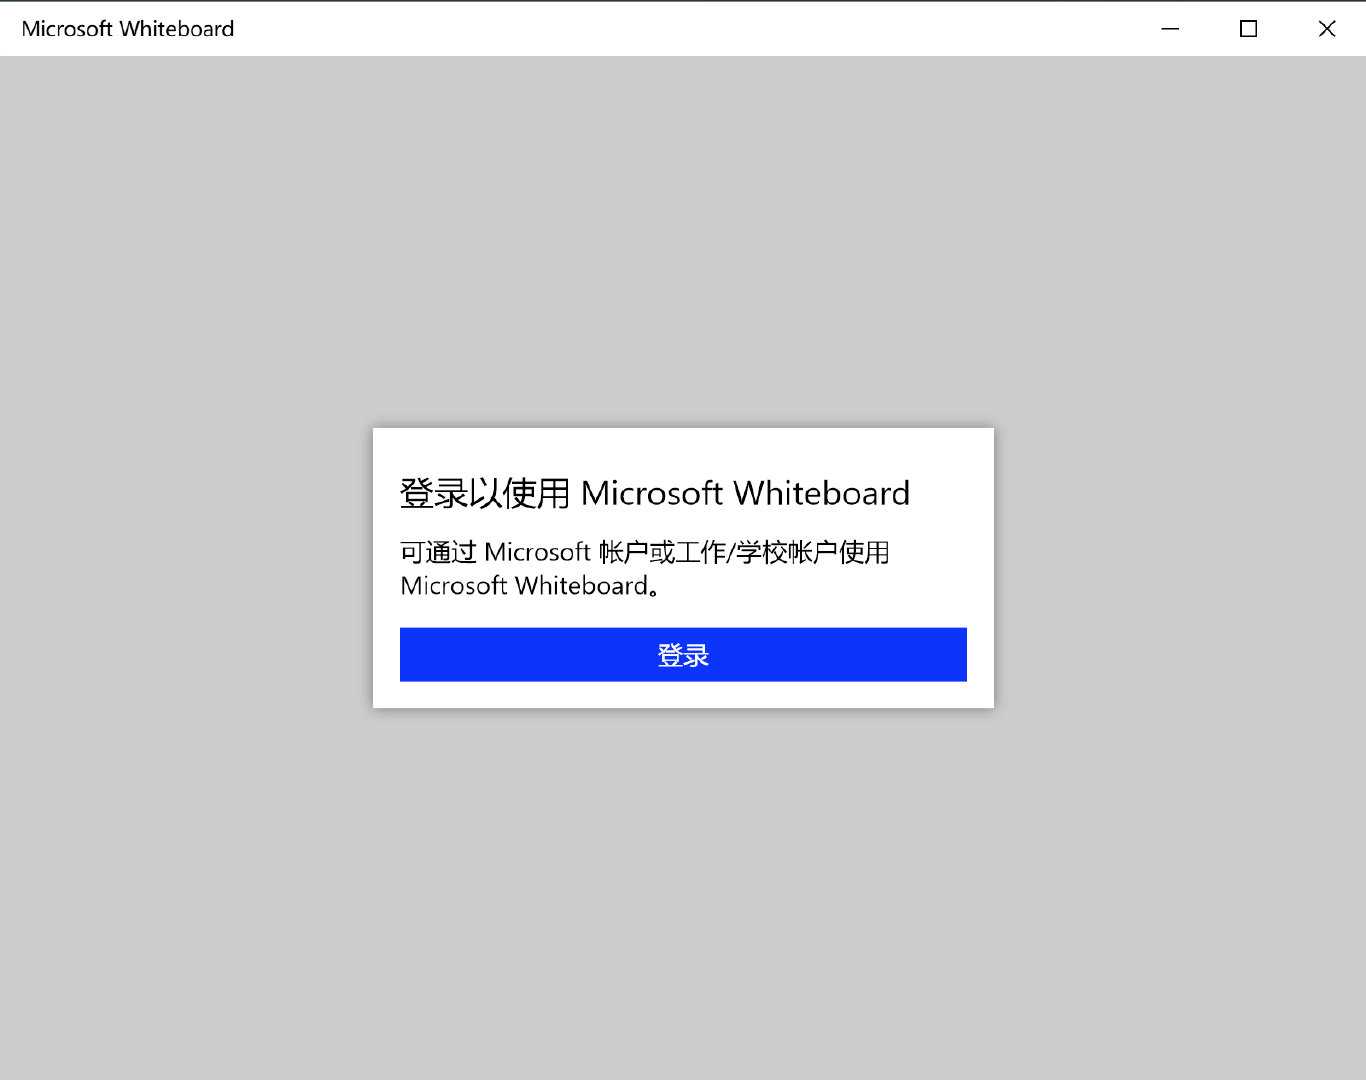 Windows 10 21H2 太阳谷更新镜像发布，萝卜哥带你抢先体验（附下载）